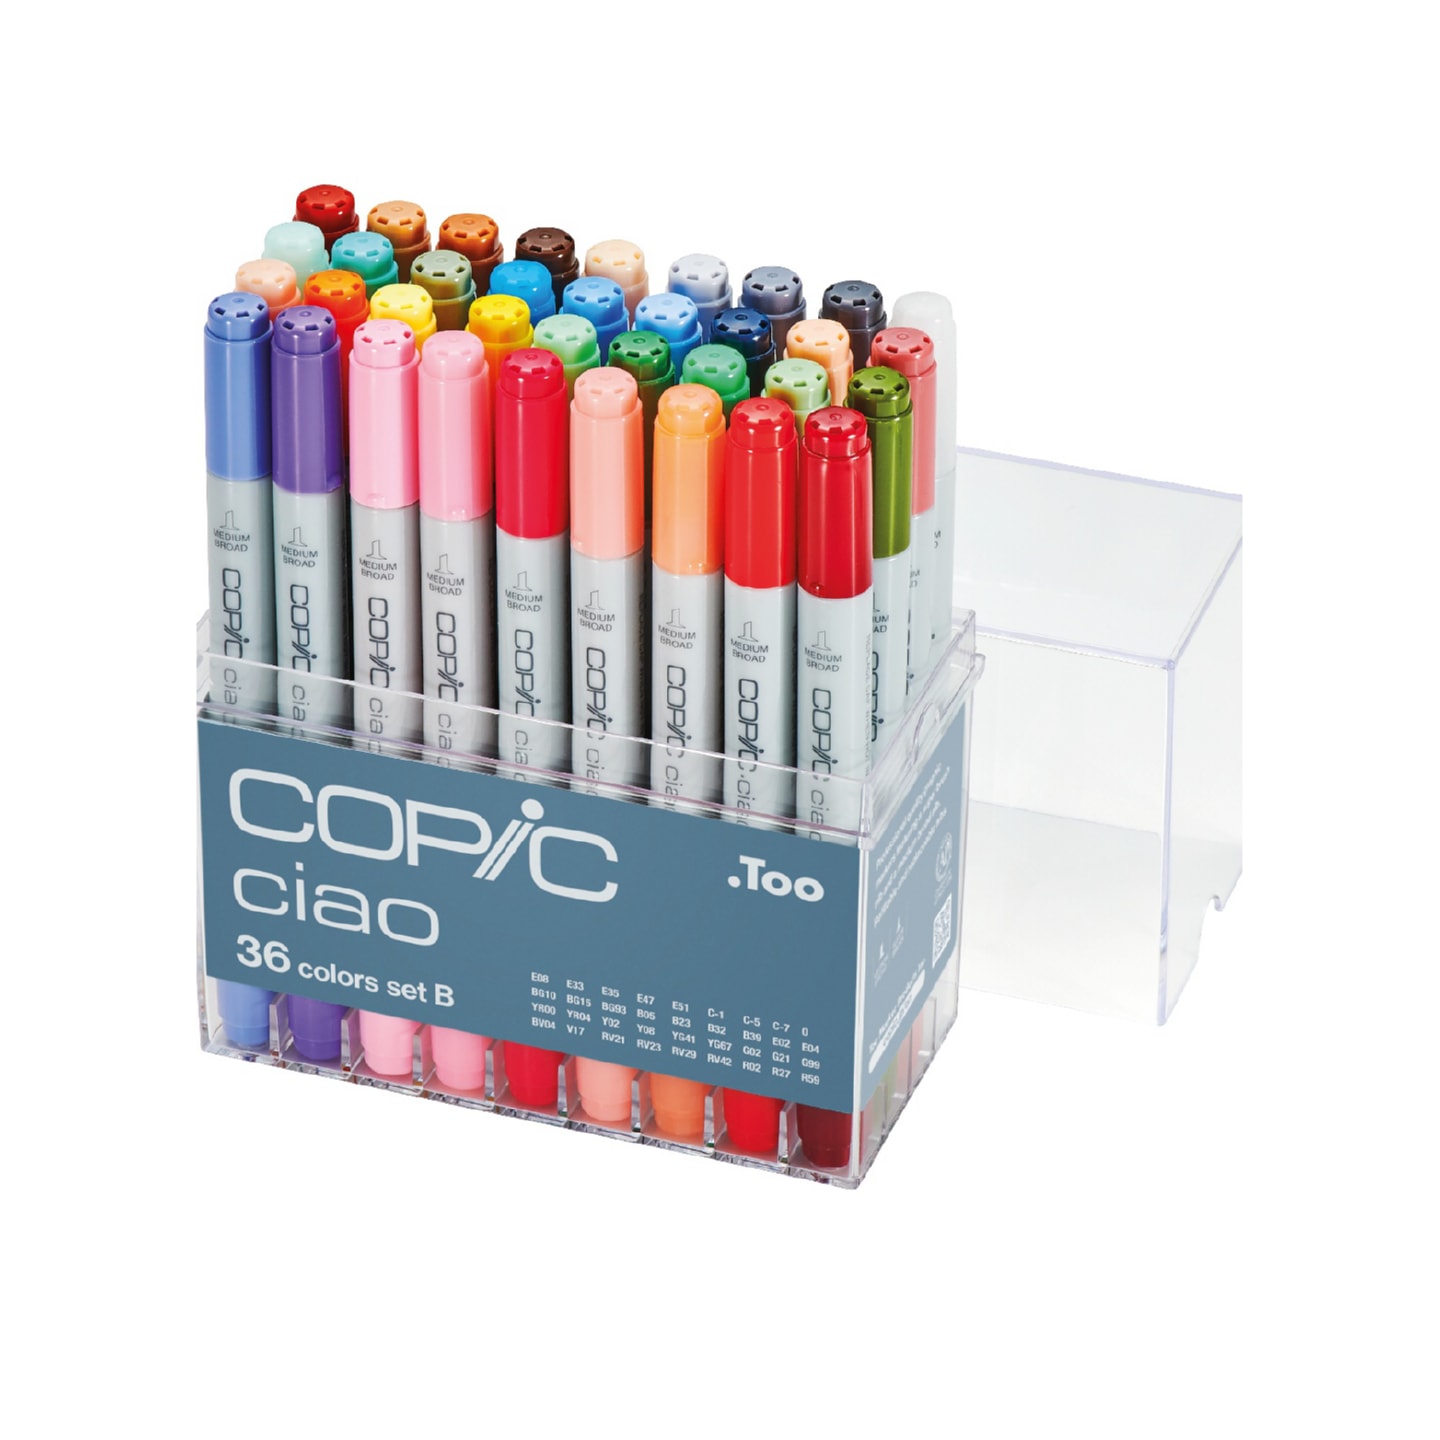 Набор маркеров Copic Ciao цвета B 36цв